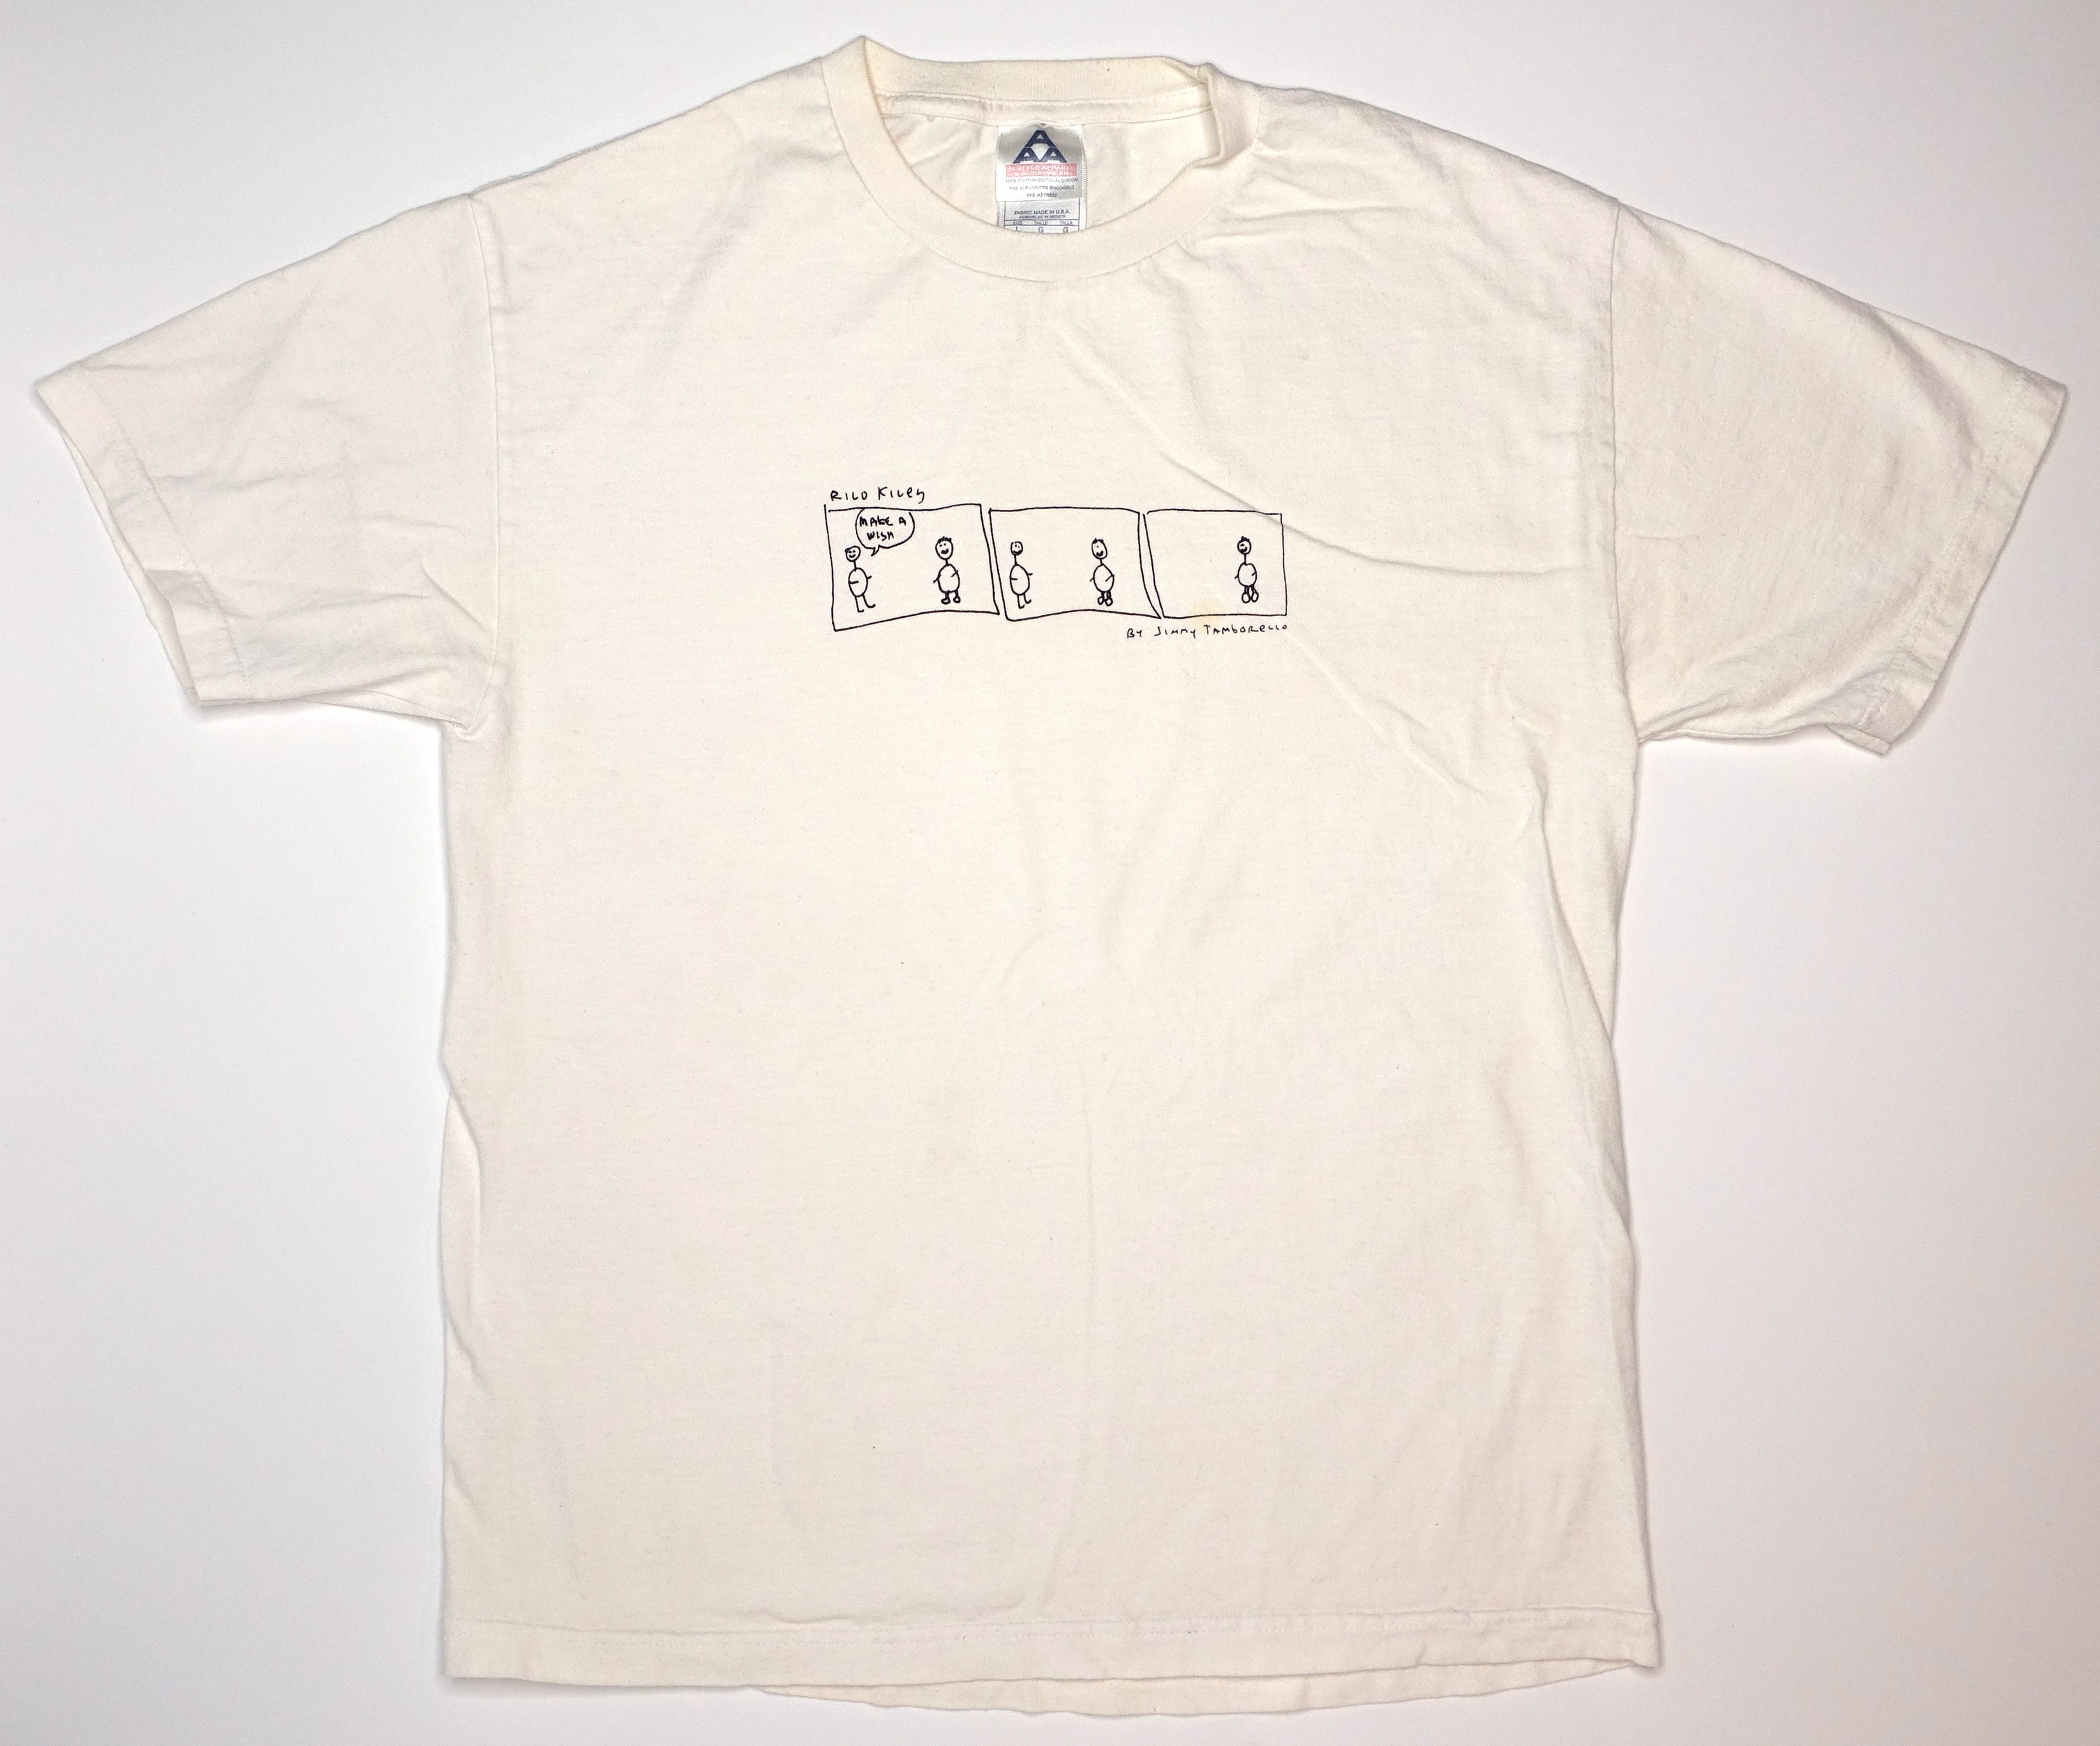 Rilo Kiley ‎– (ORIGINAL) Make A Wish by Jimmy Tamborello 2002 Tour Shirt Size Large